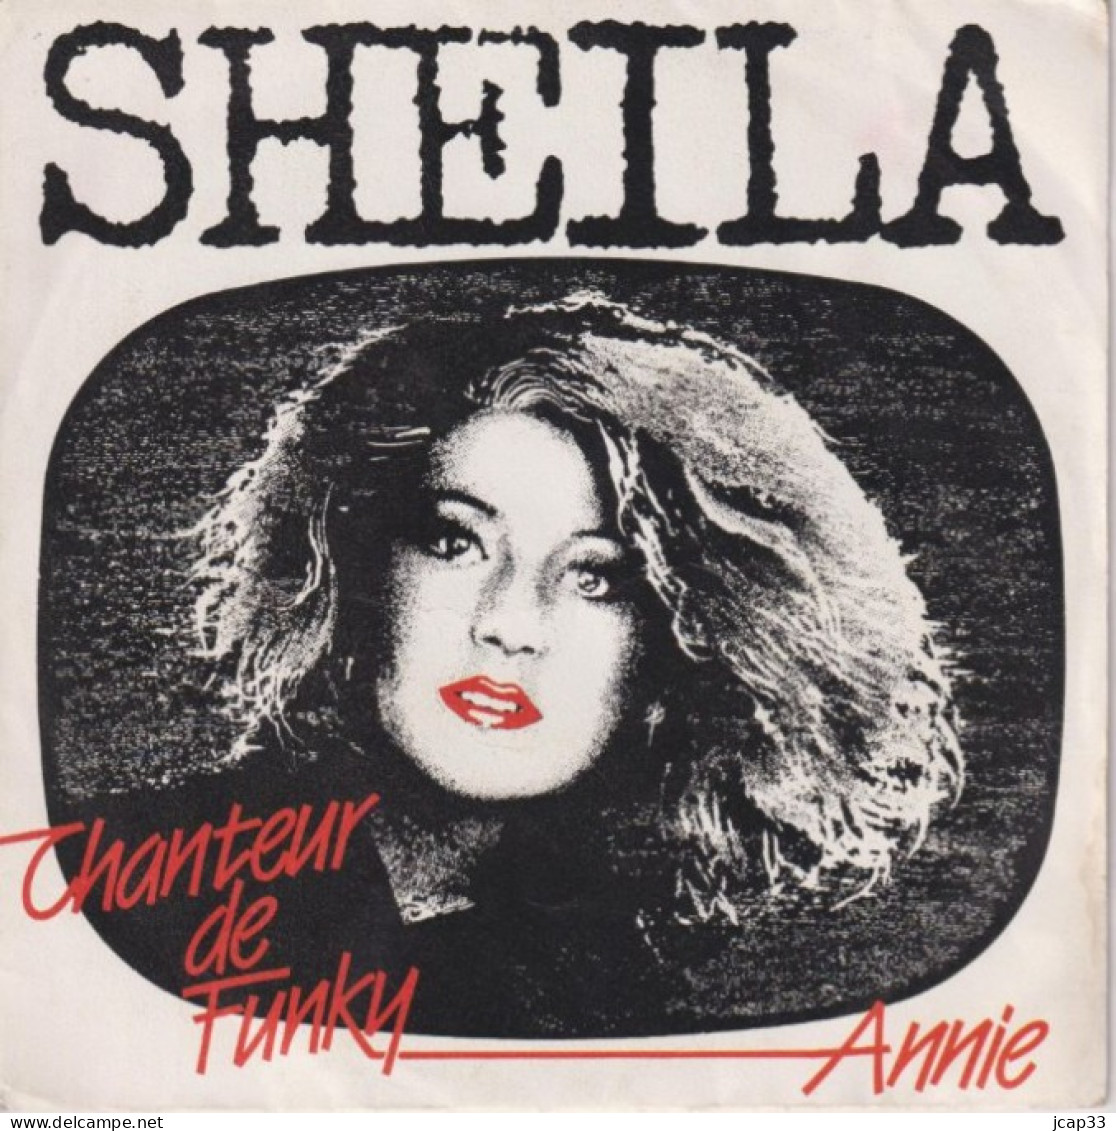 SHEILA  -  CHANTEUR DE FUNKY  -  ANNIE  -  1985  - - Andere - Franstalig